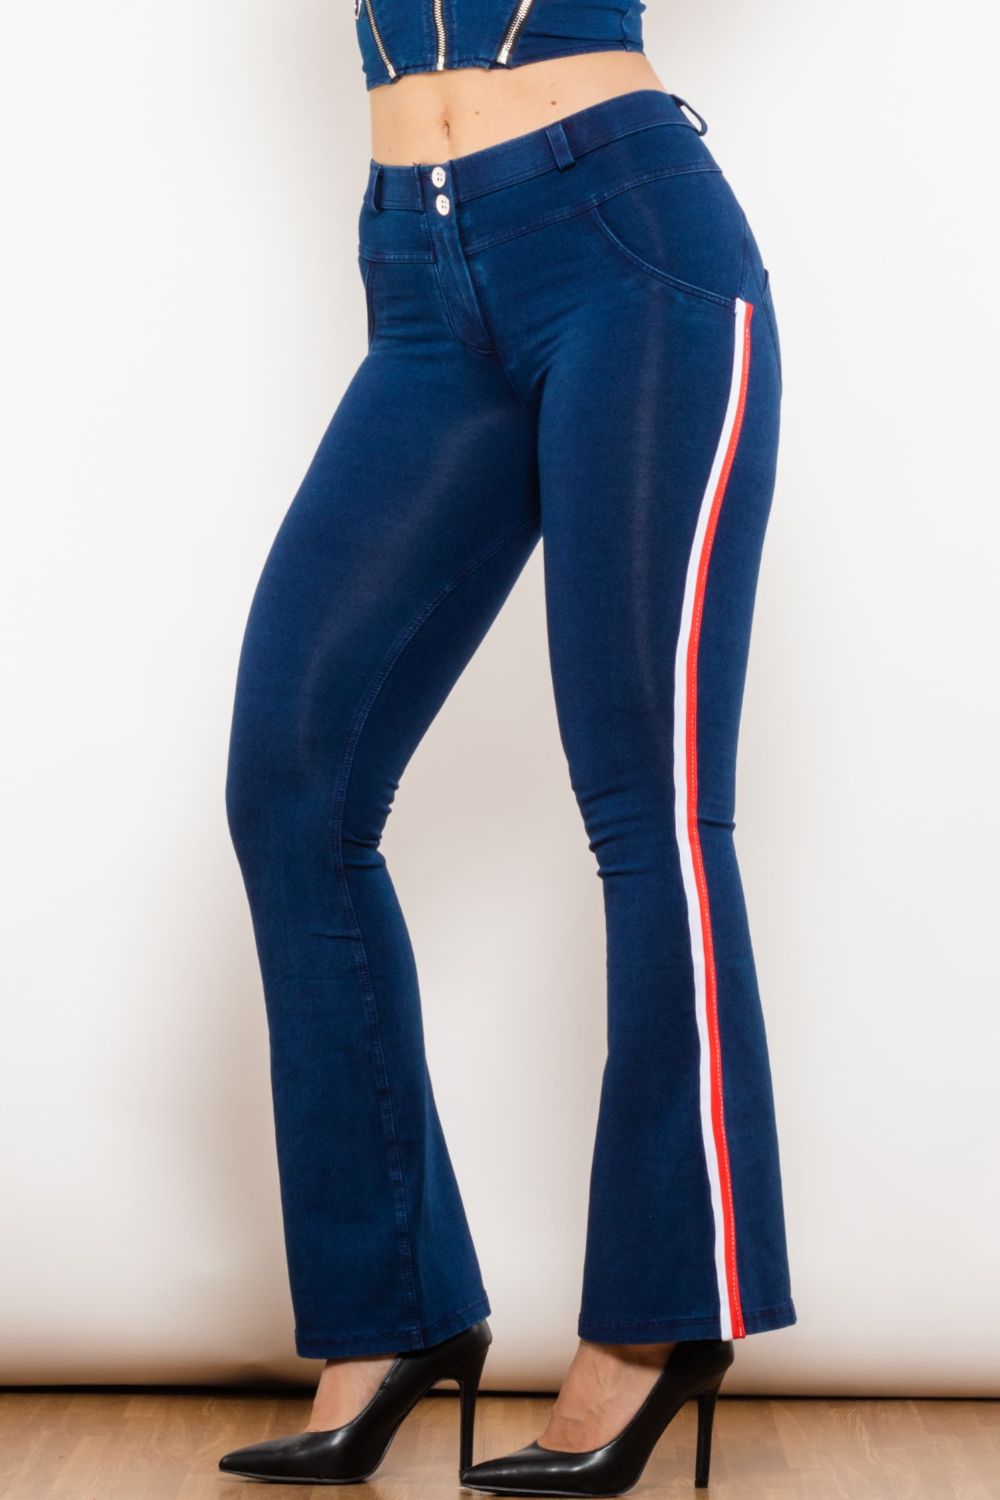 LLC – Buttoned Bootcut Jeans Flyclothing Stripe Side